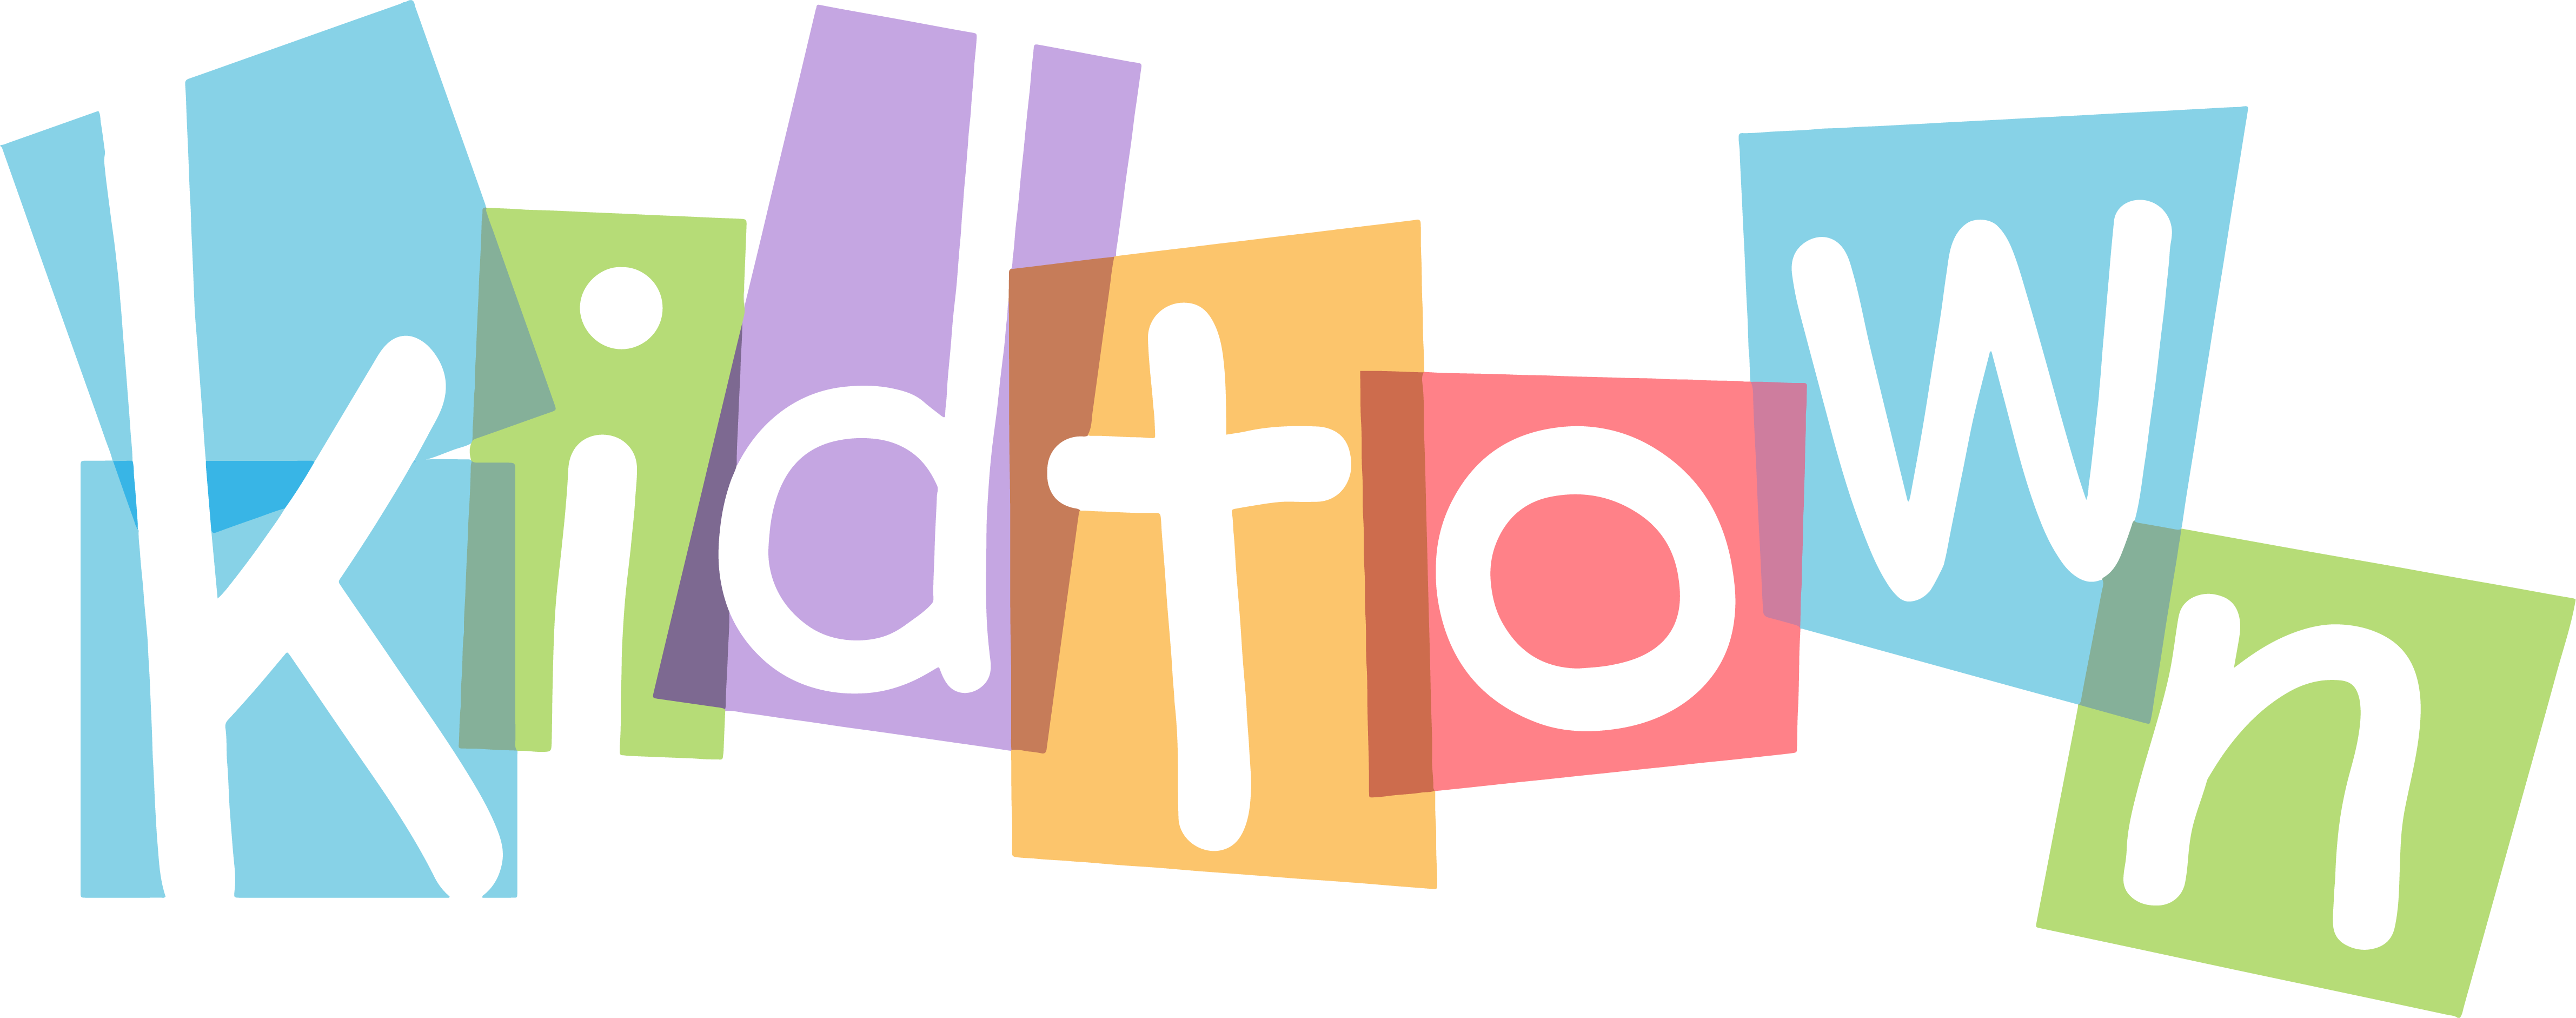 Kidtown Logo - Pantone (4764x1882)